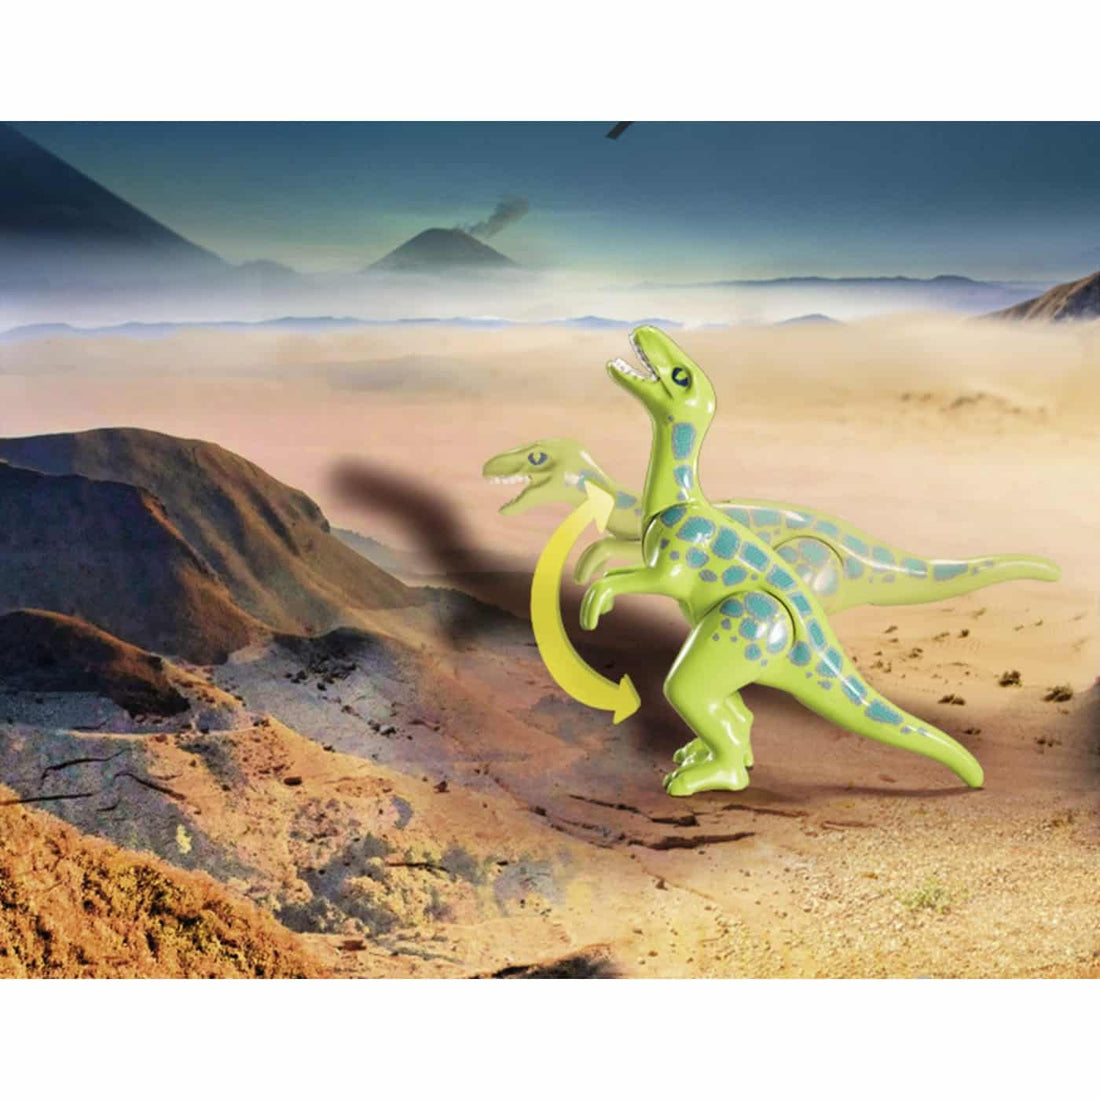 70108 Playmobil Maxi Βαλιτσακι Εξερευνητης Και Δεινοσαυροι